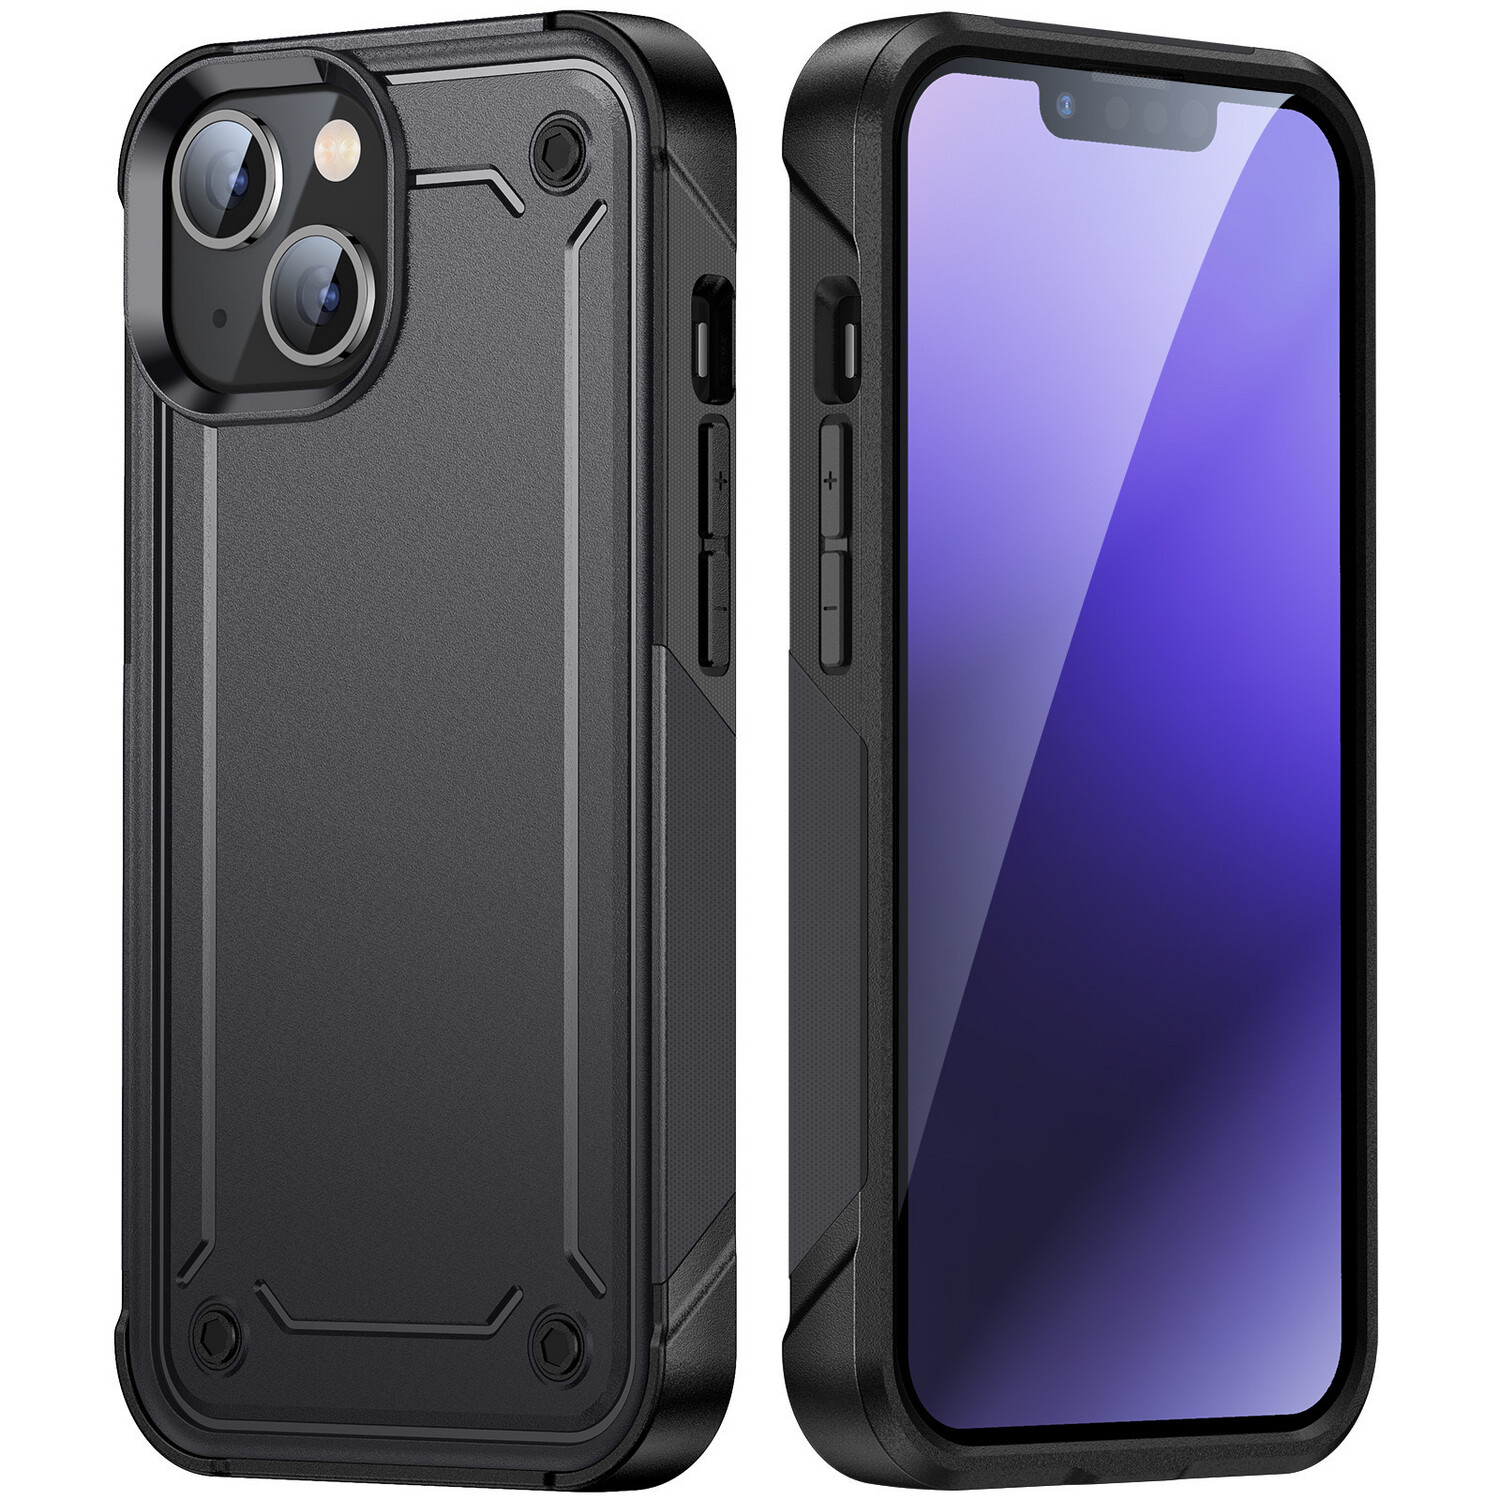 iPhone 11 6.1 2-piece Protective Back Case, Color: Black